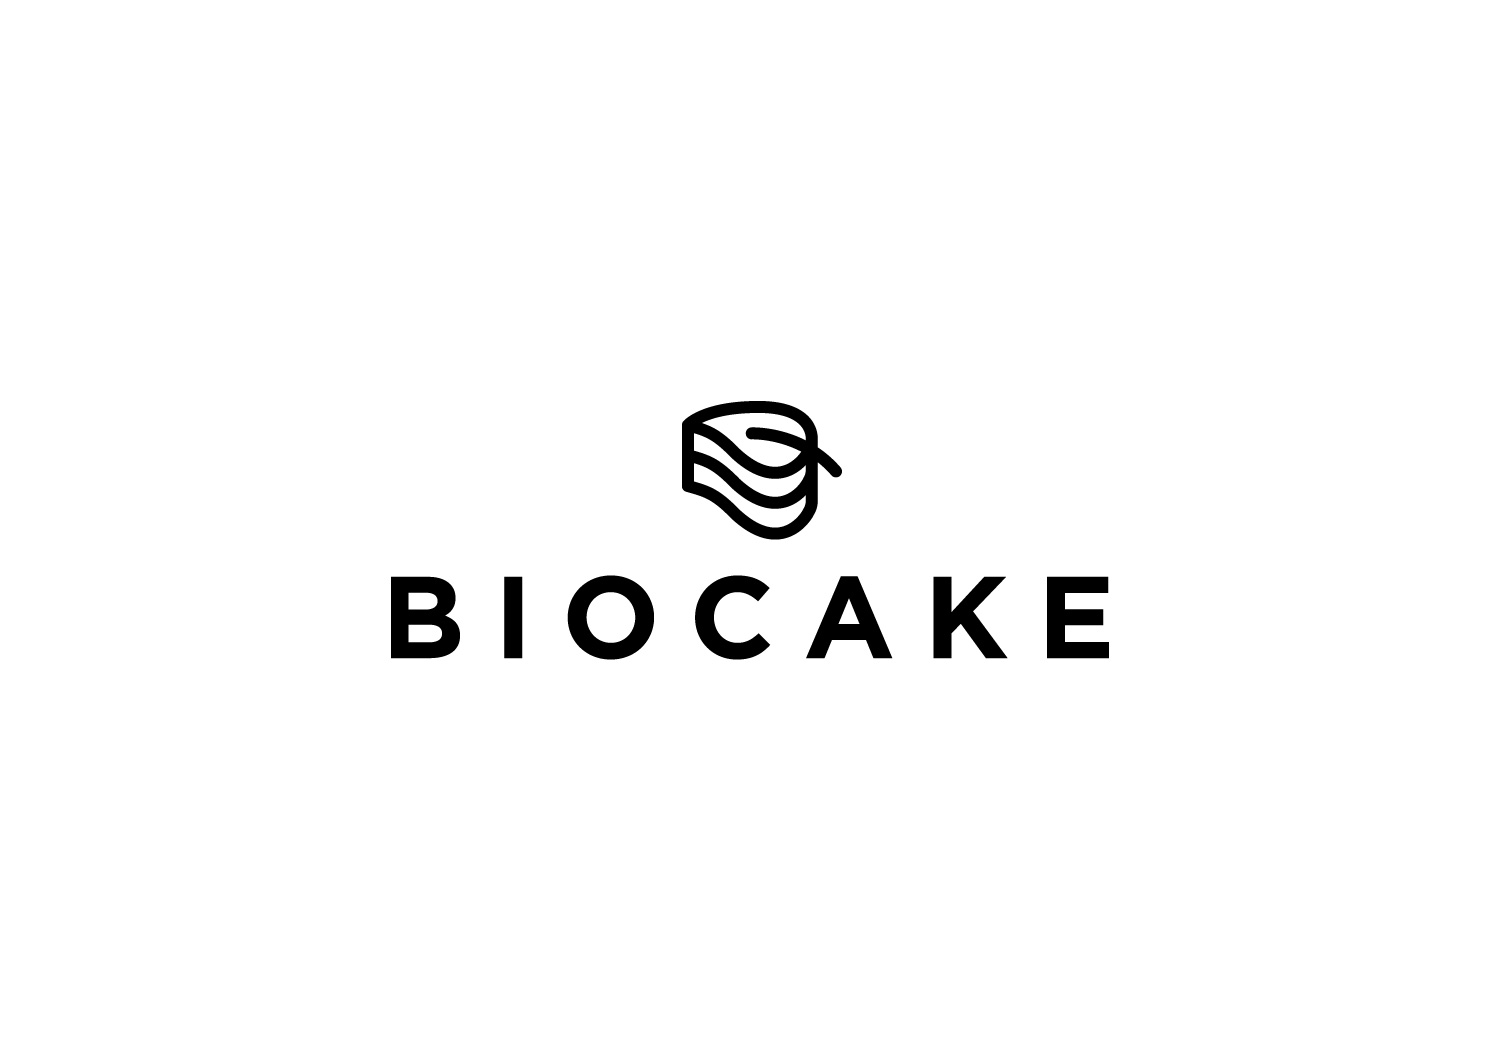 biocake-alone-black3-jpg